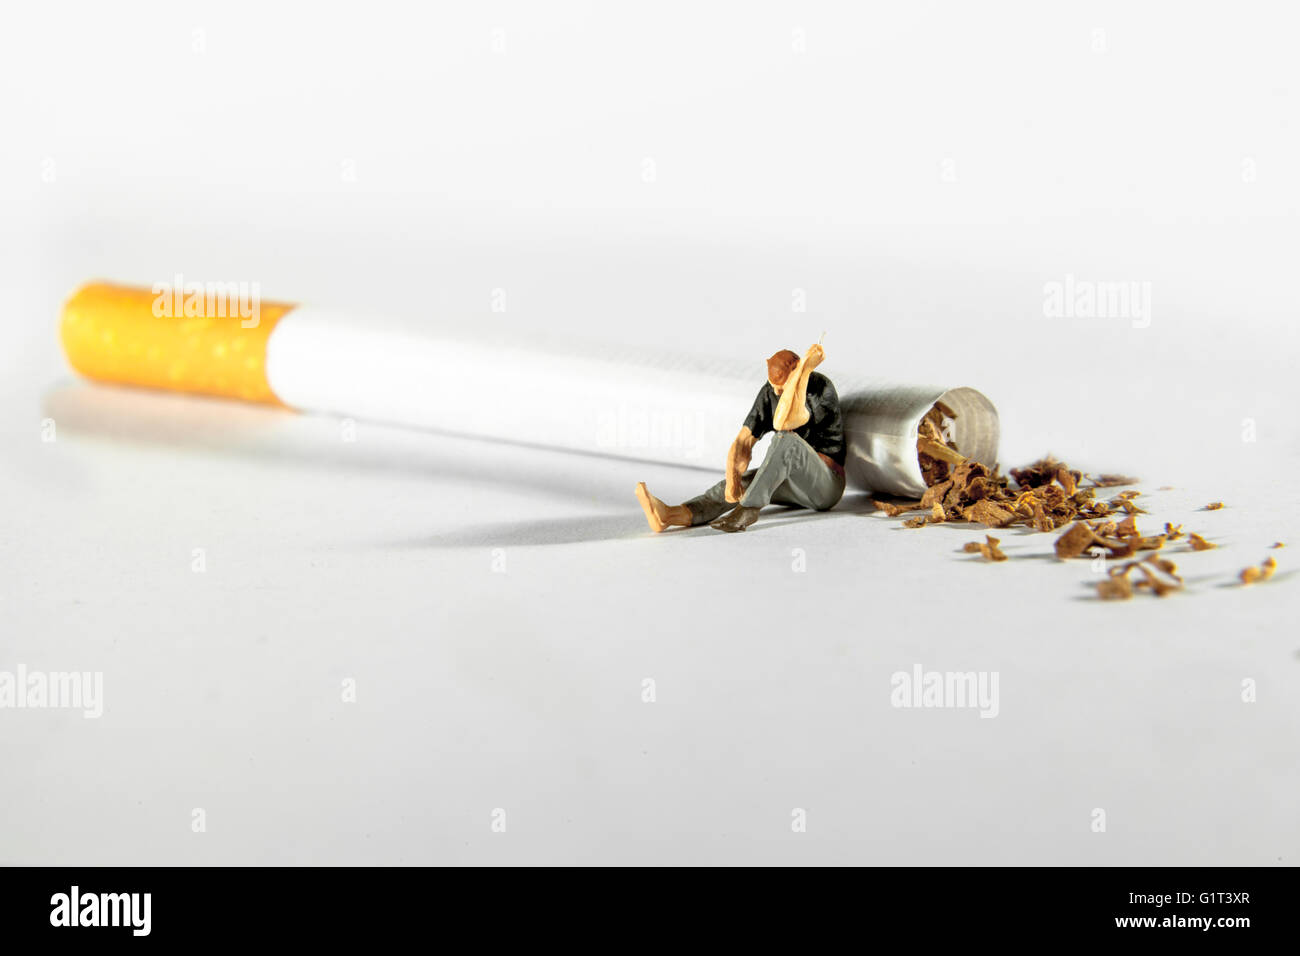 smoker on a cigarette Stock Photo